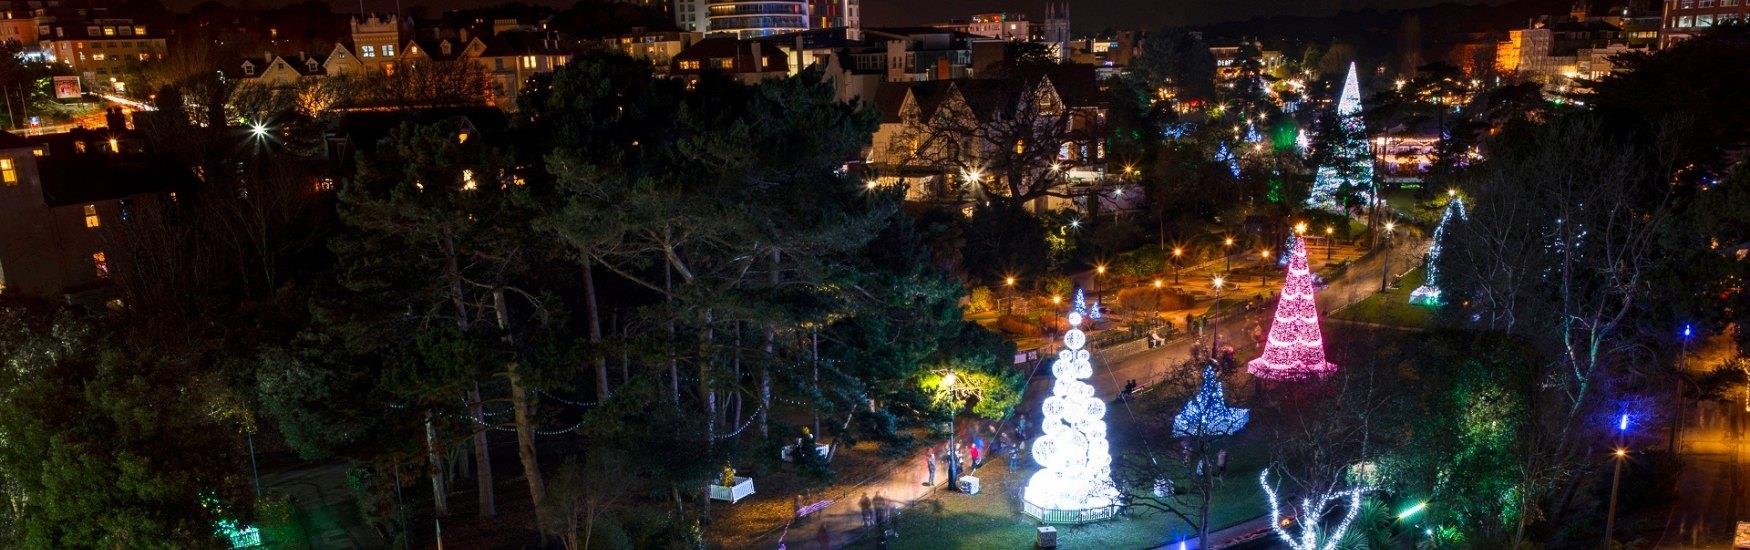 Christmas Tree Wonderland tree's illuminating the night sky in Bournemouth Gardens